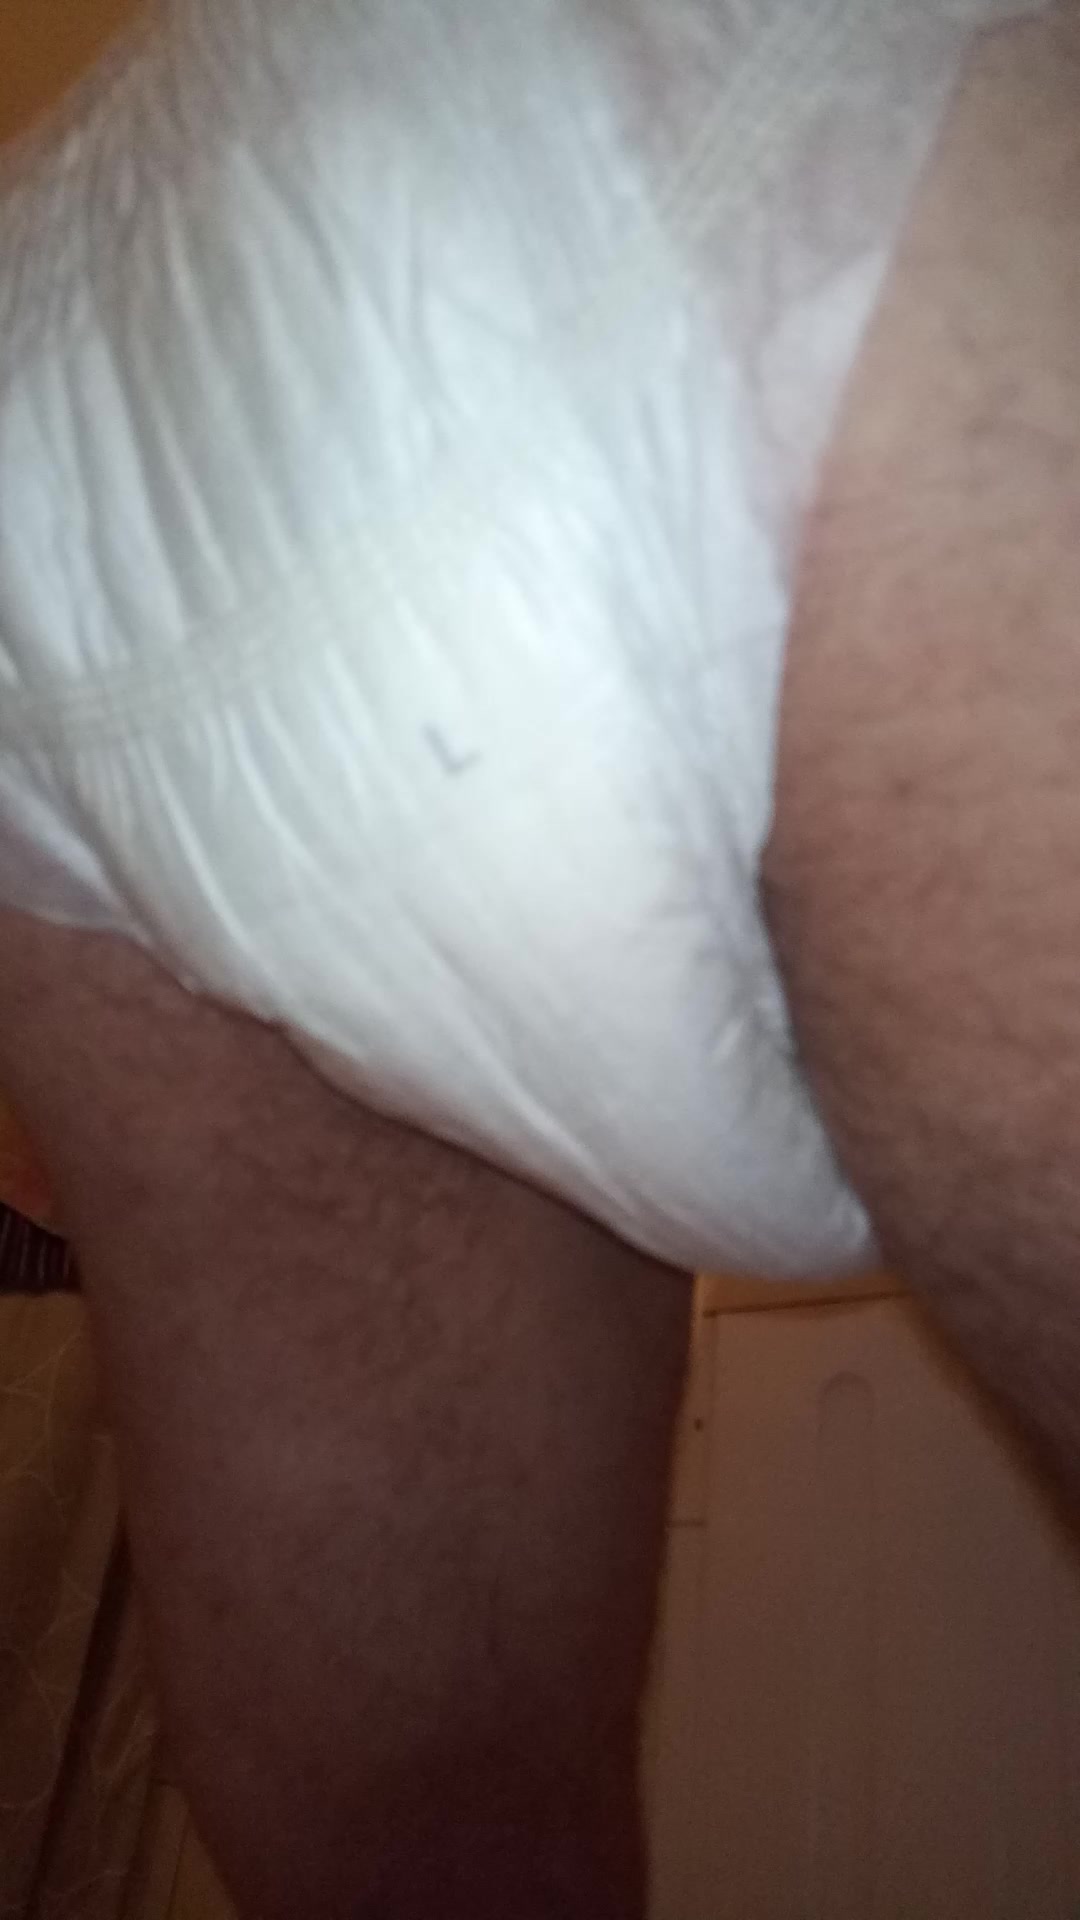 Wet dirty diaper fart 1h after enema